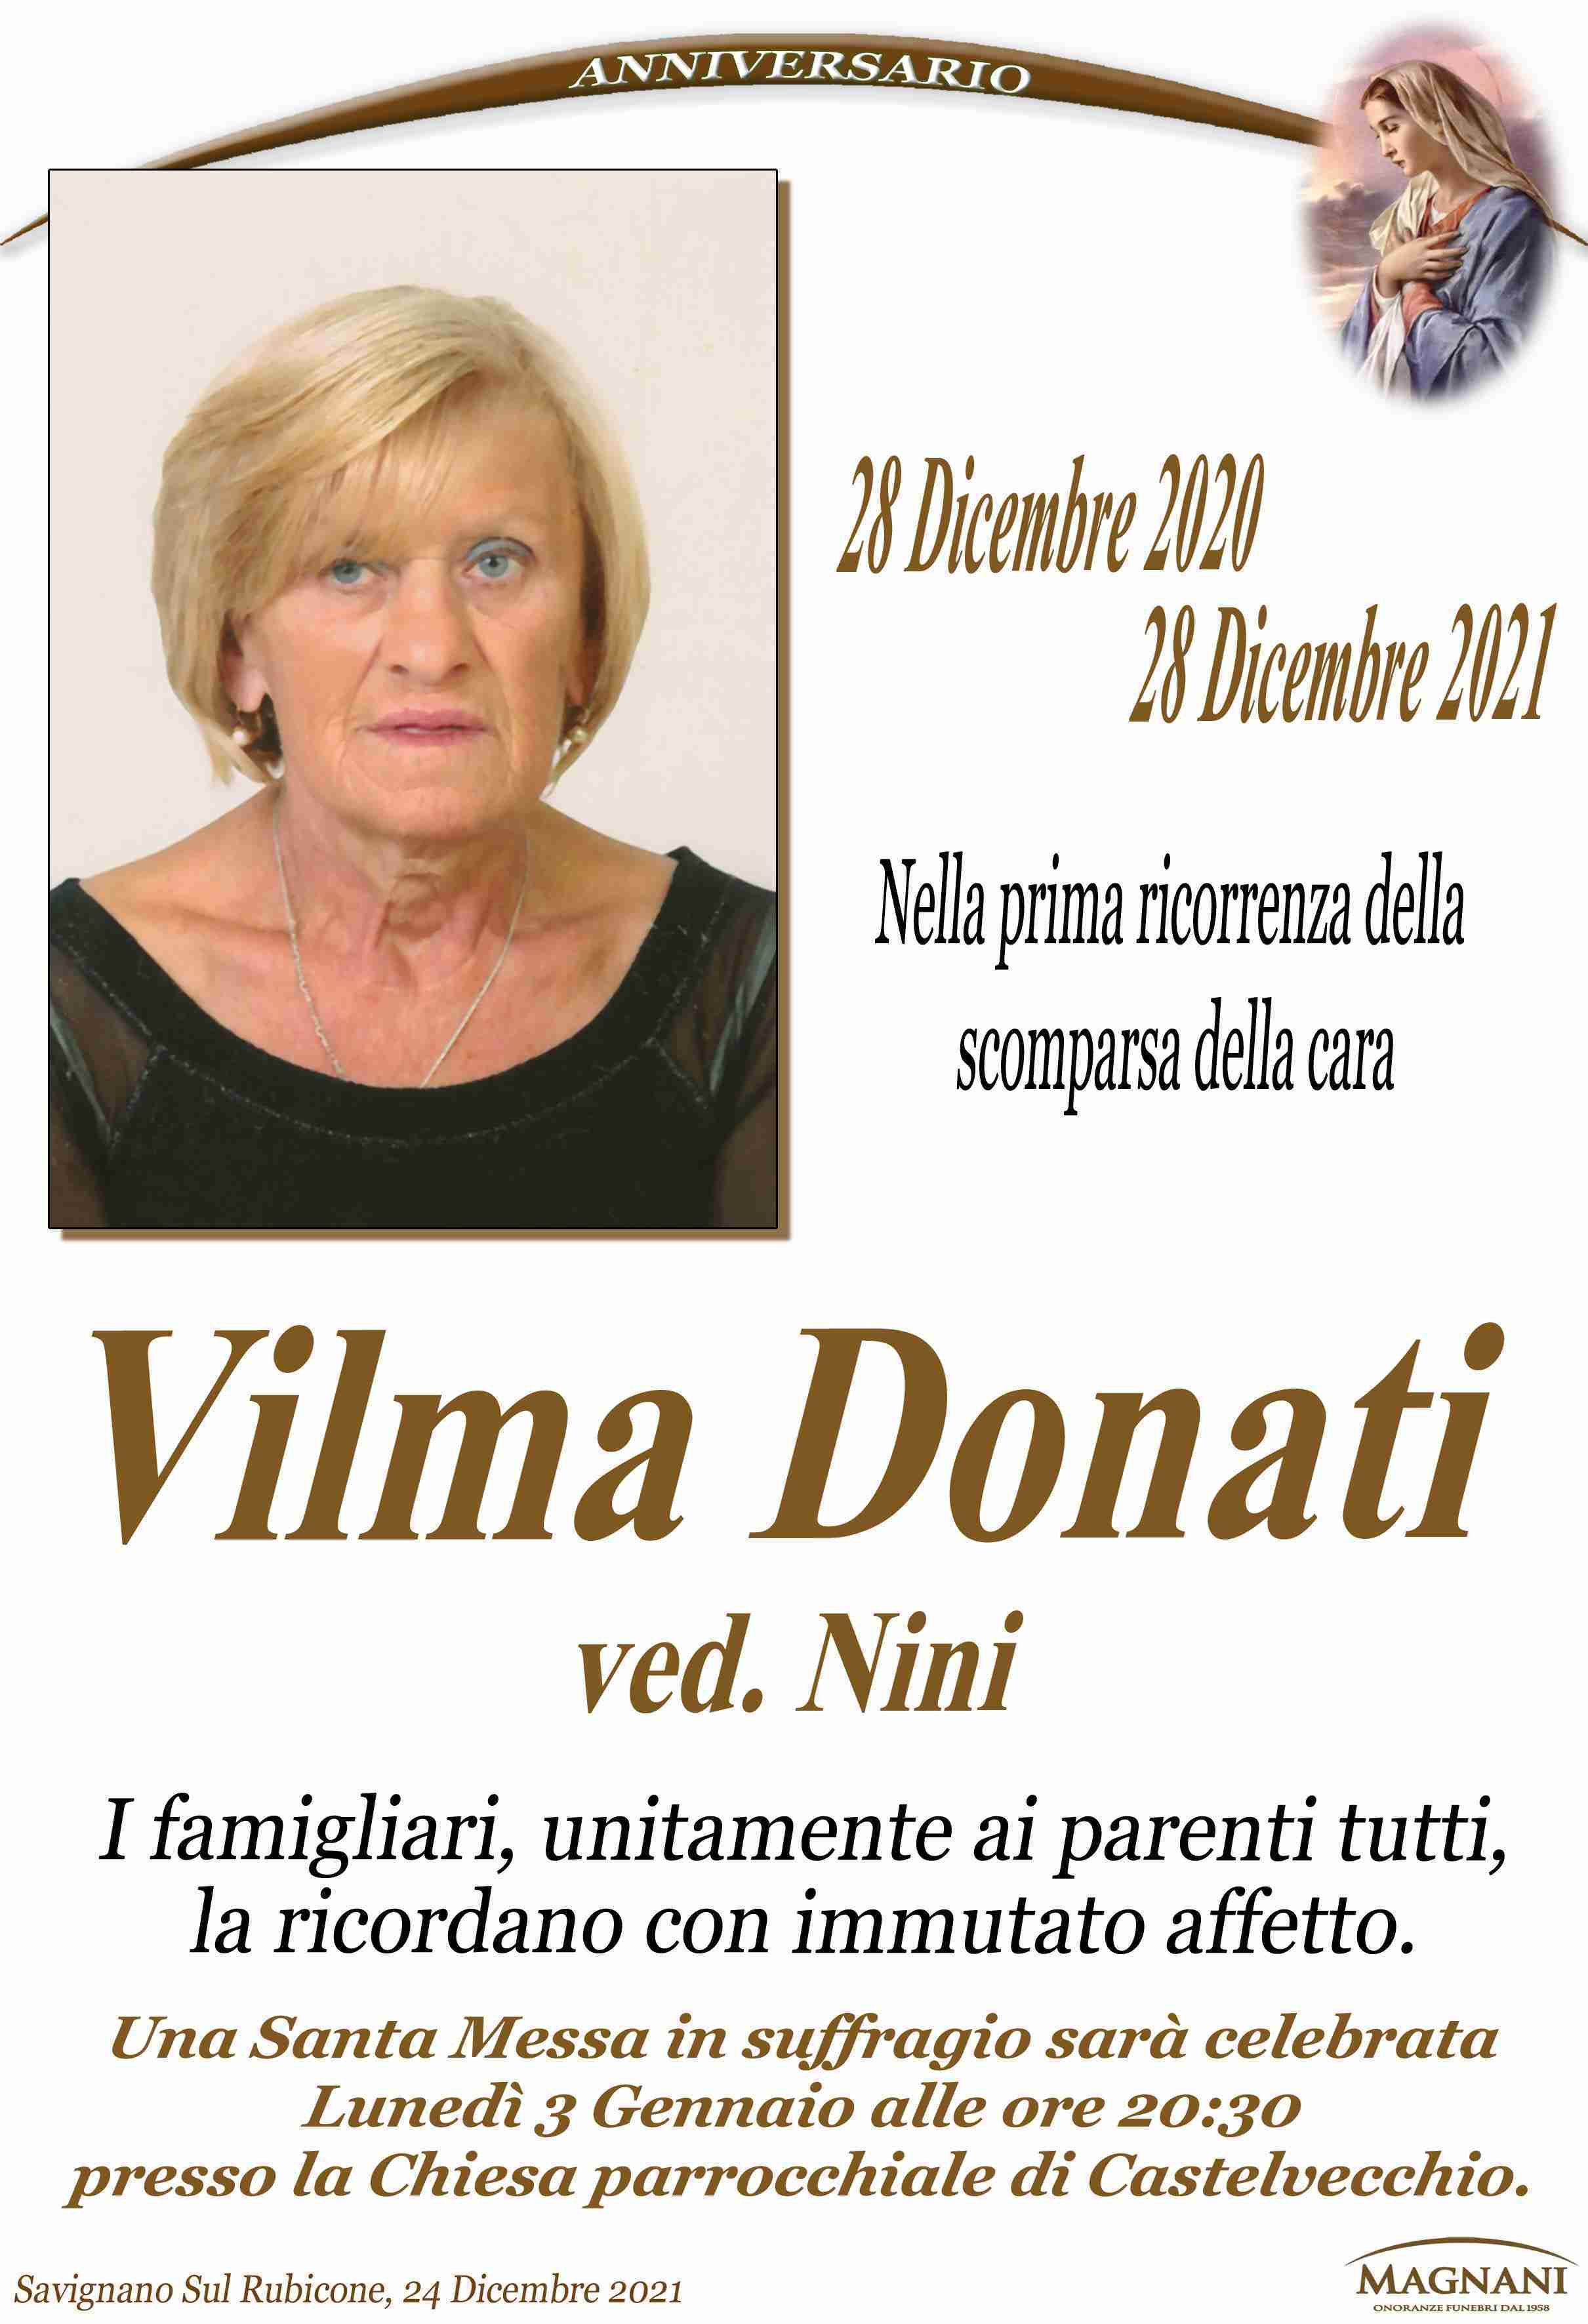 Vilma Donati